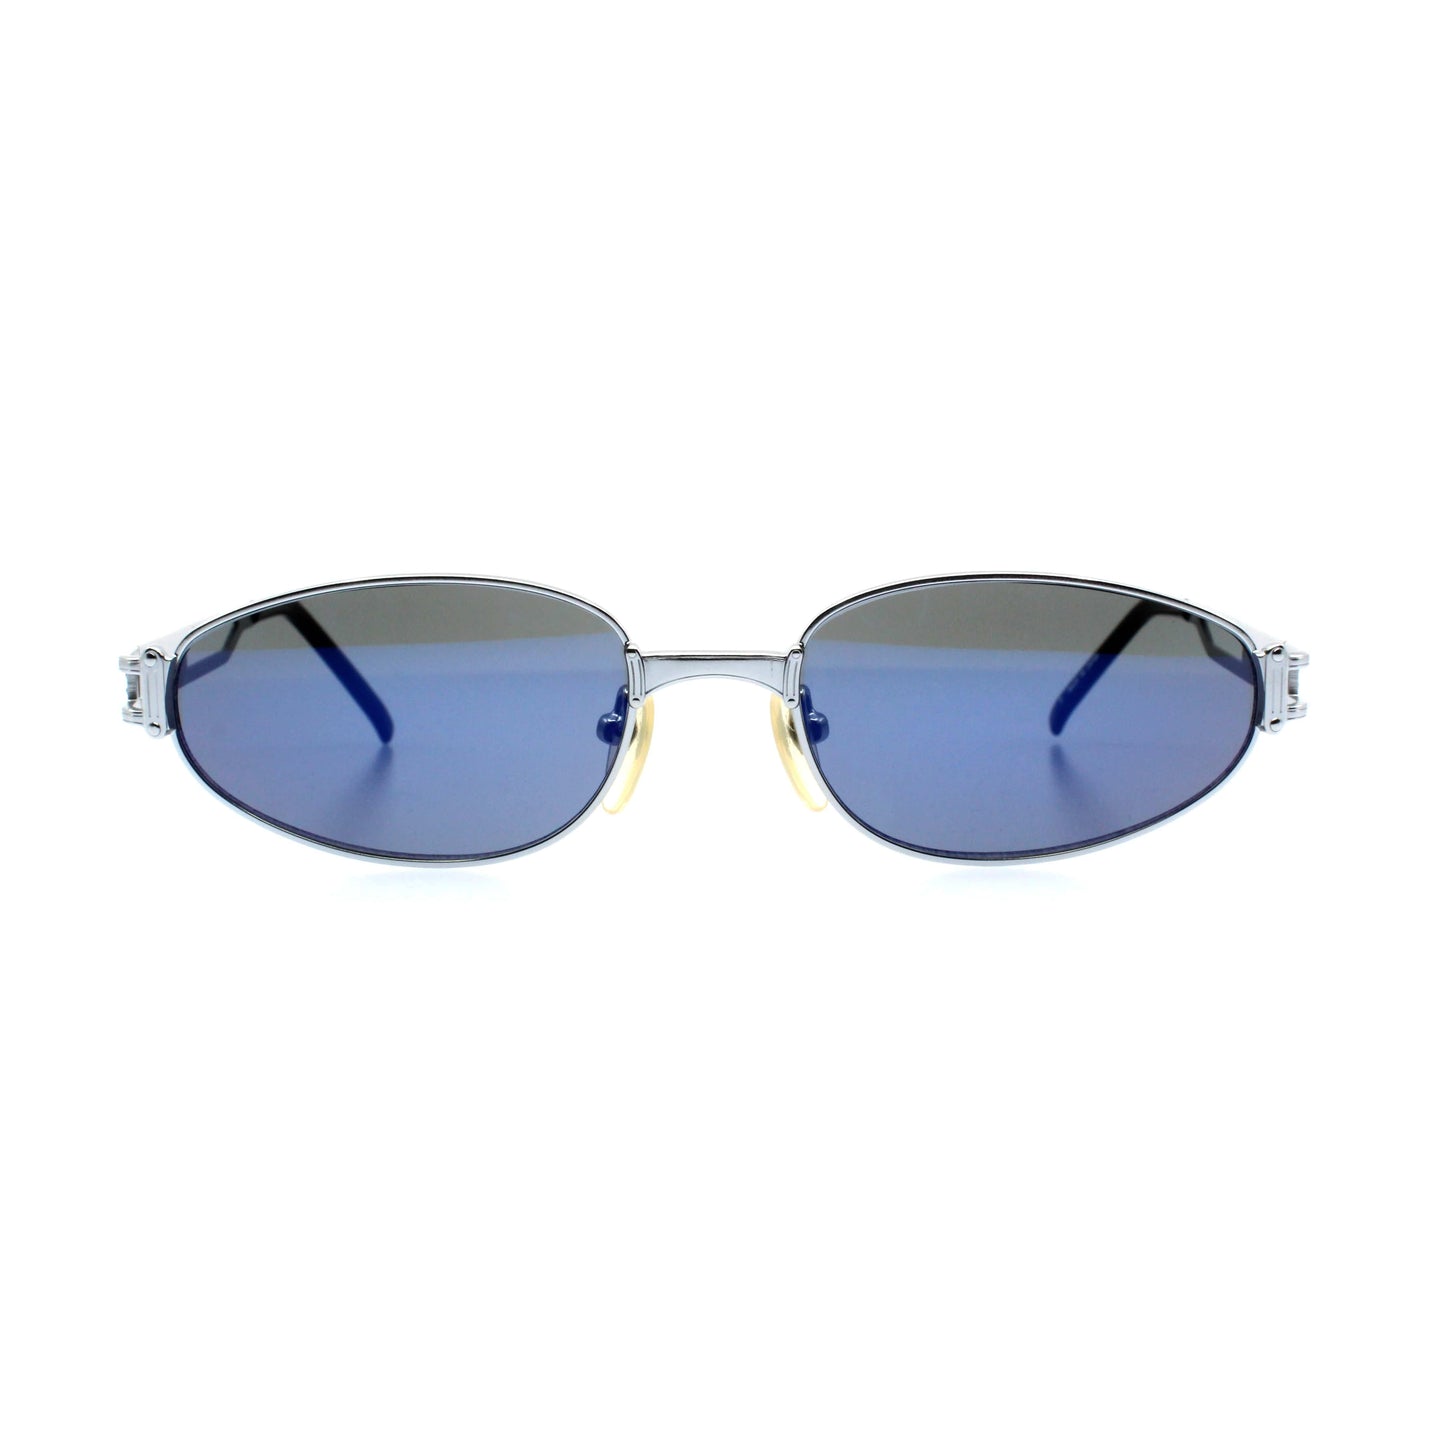 Silver Vintage Jean Paul Gaultier 58-6108 Sunglasses RSTKD Vintage